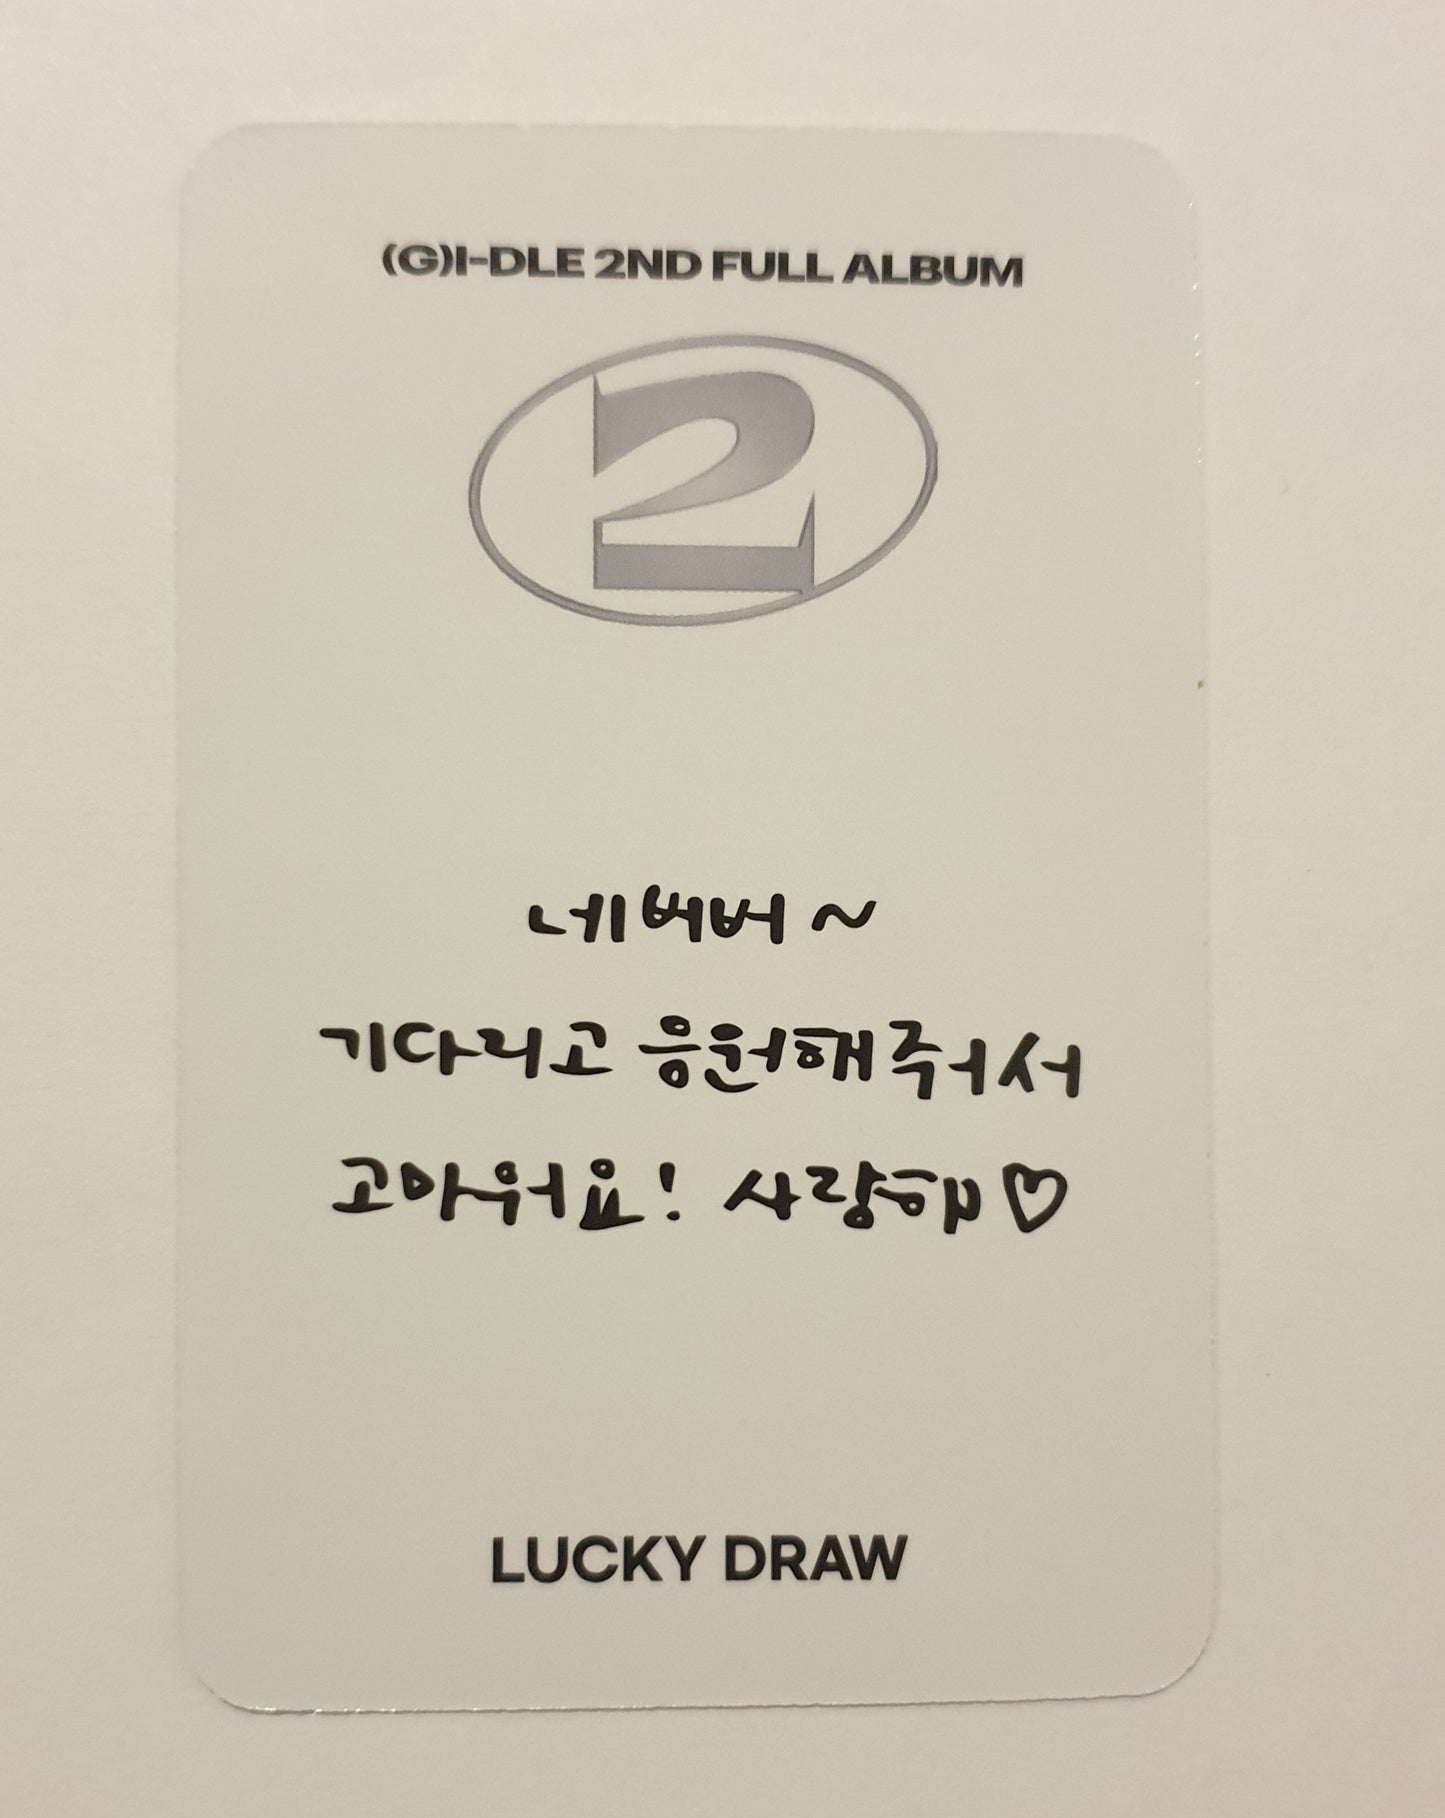 Minnie (G)i-dle Lucky Draw Apple Music POB Album "2"